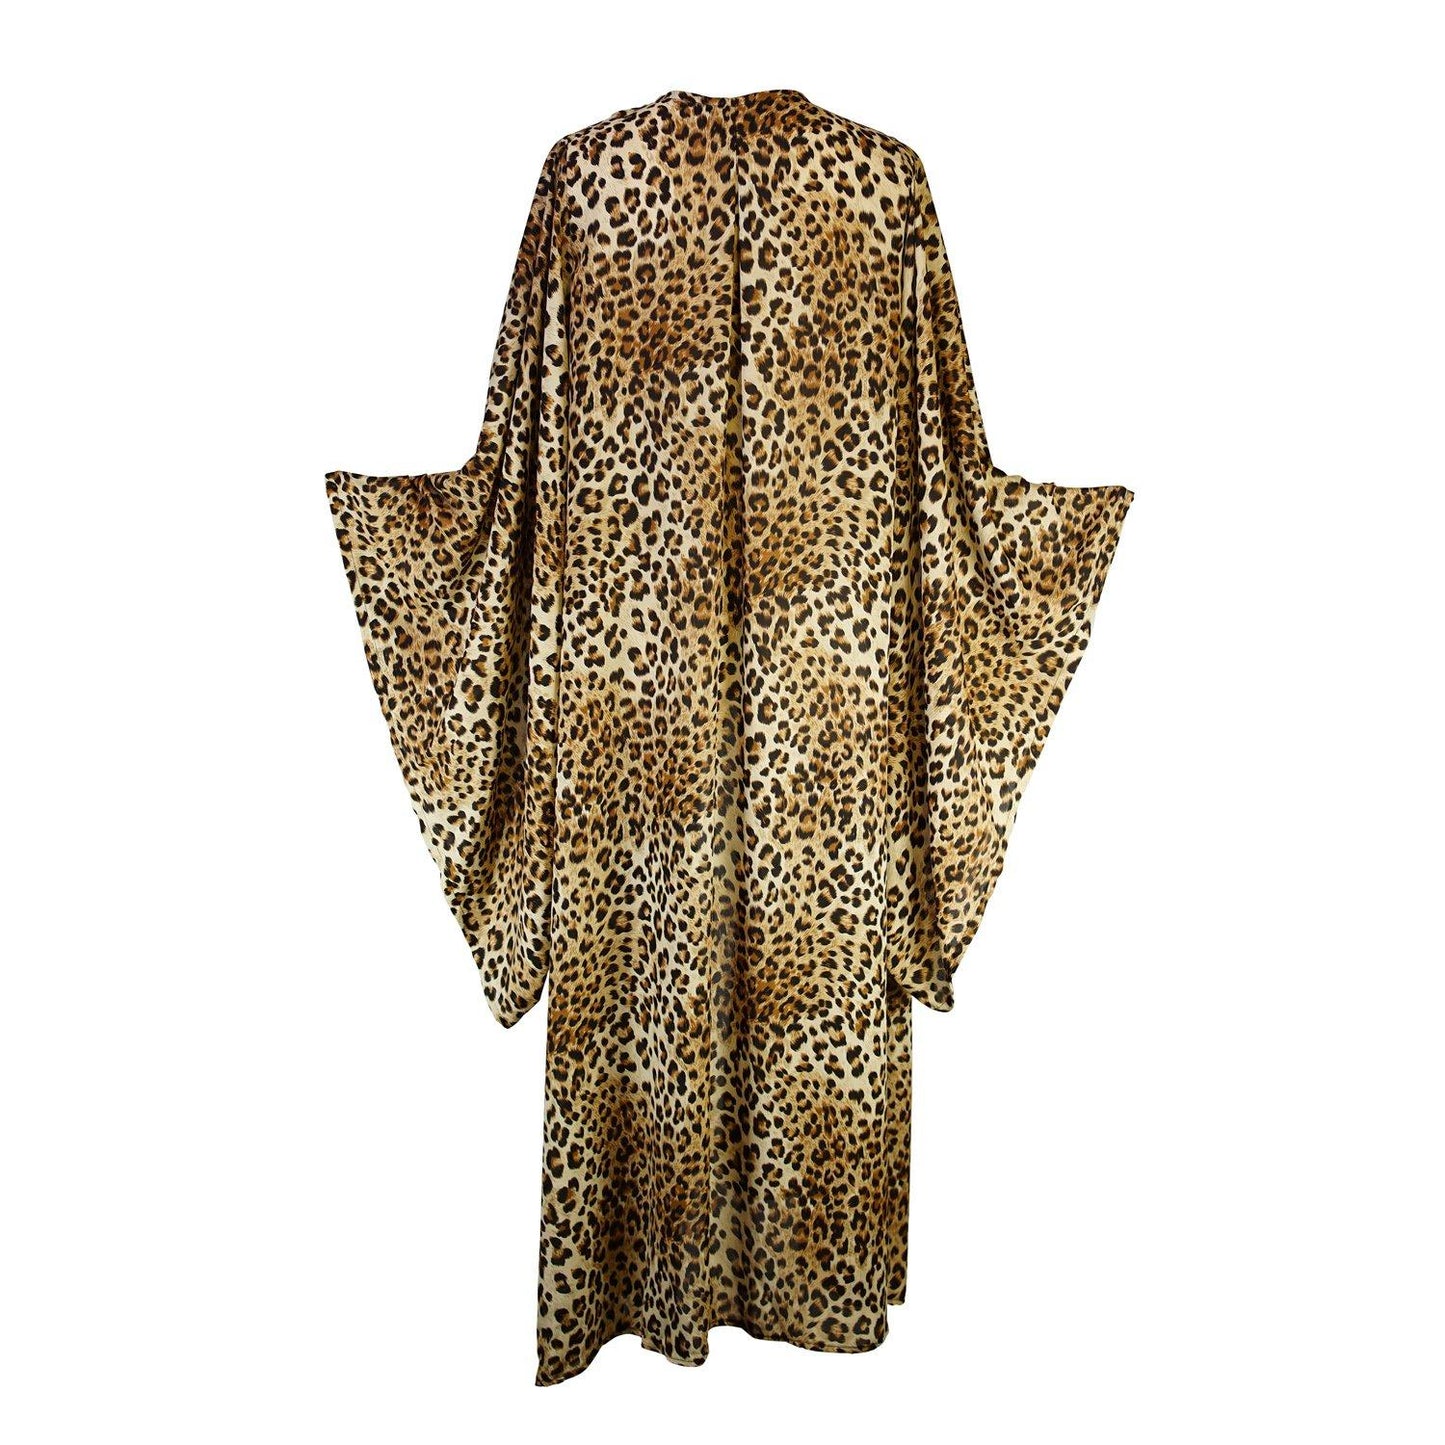 jennafer grace leon leopard cheetah animal print kimono wrap dress coverup duster boho bohemian hippie beach wear resort holiday lounge loungewear handmade unisex